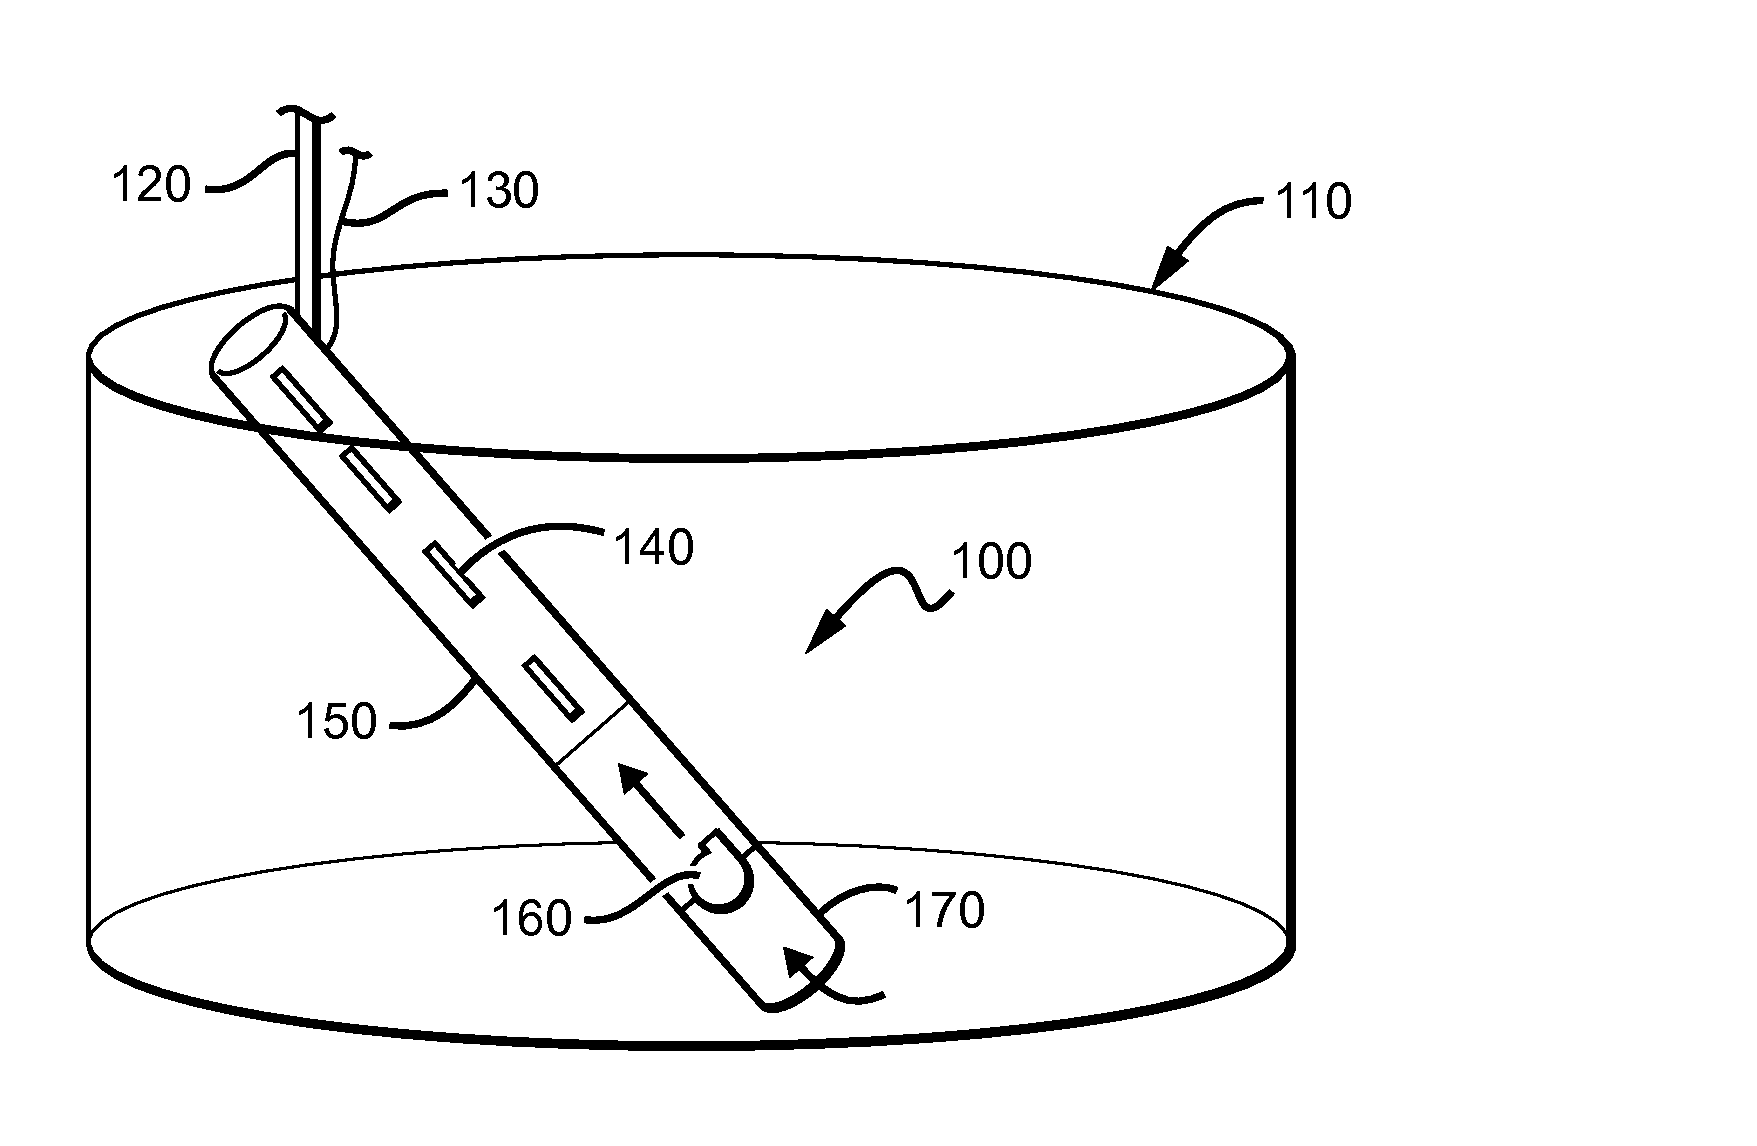 Flow tube reactor